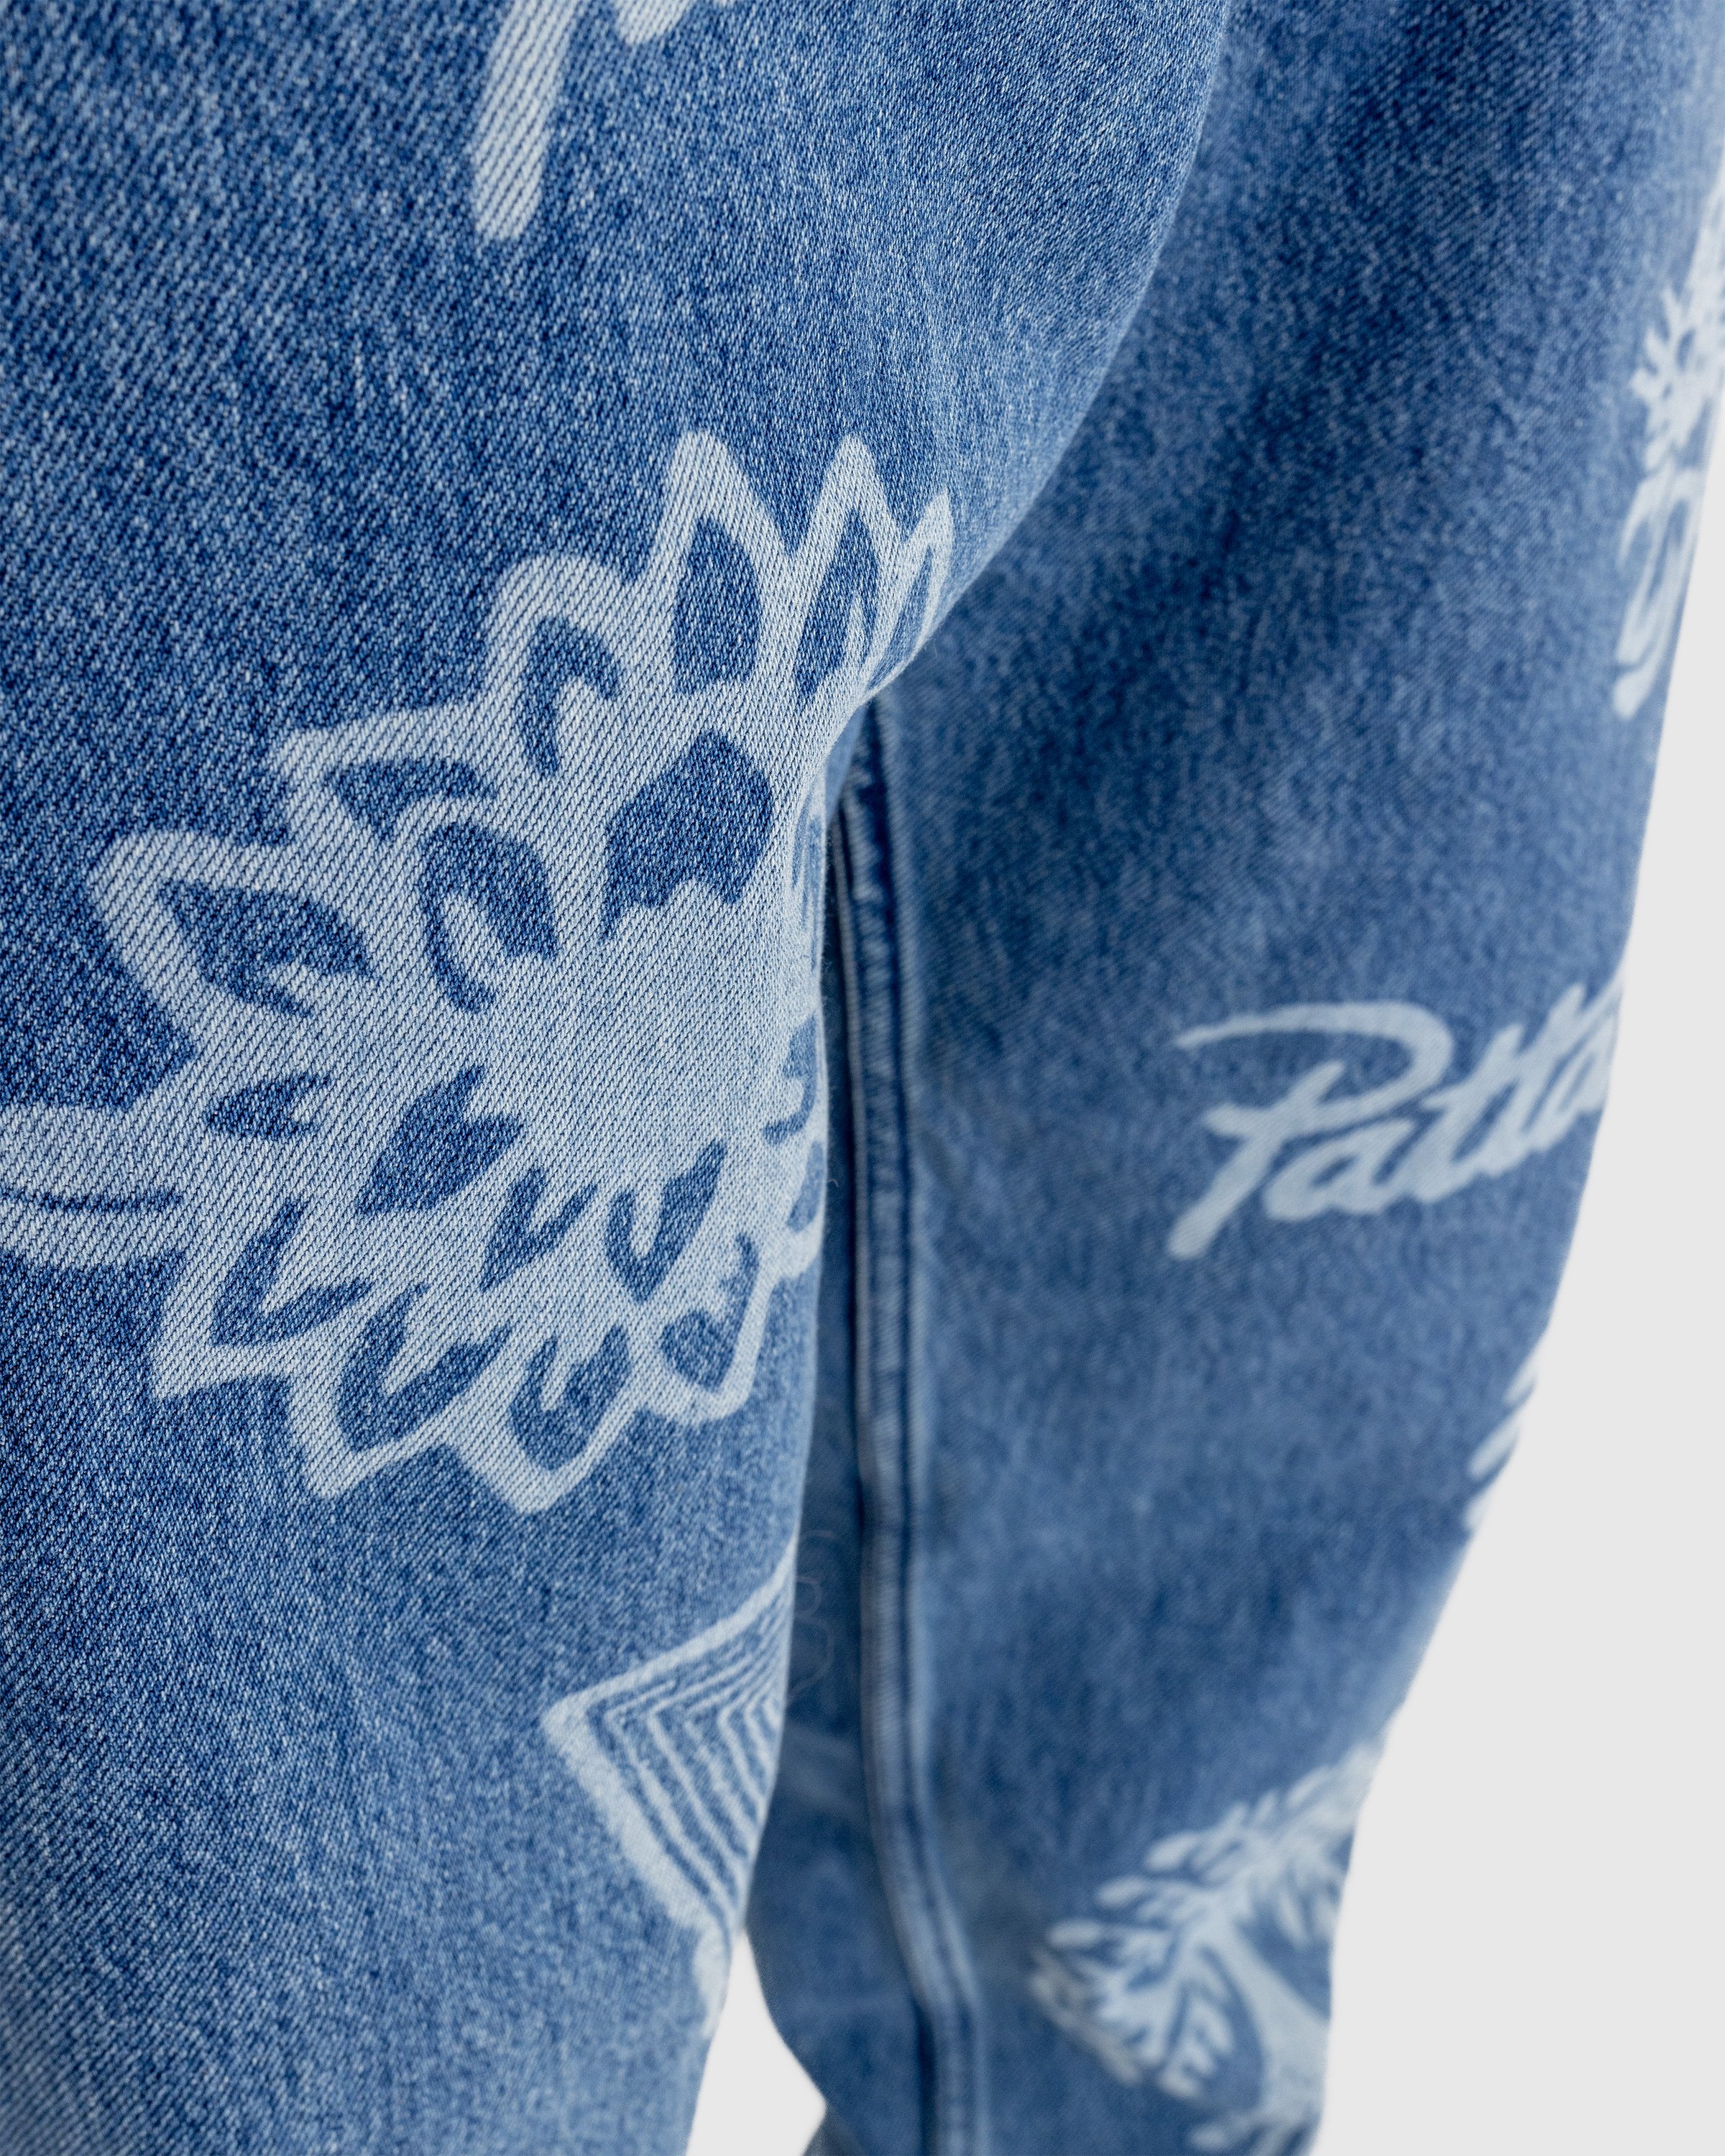 Patta - Hope Love Peace Denim Pants - Clothing - Blue - Image 5